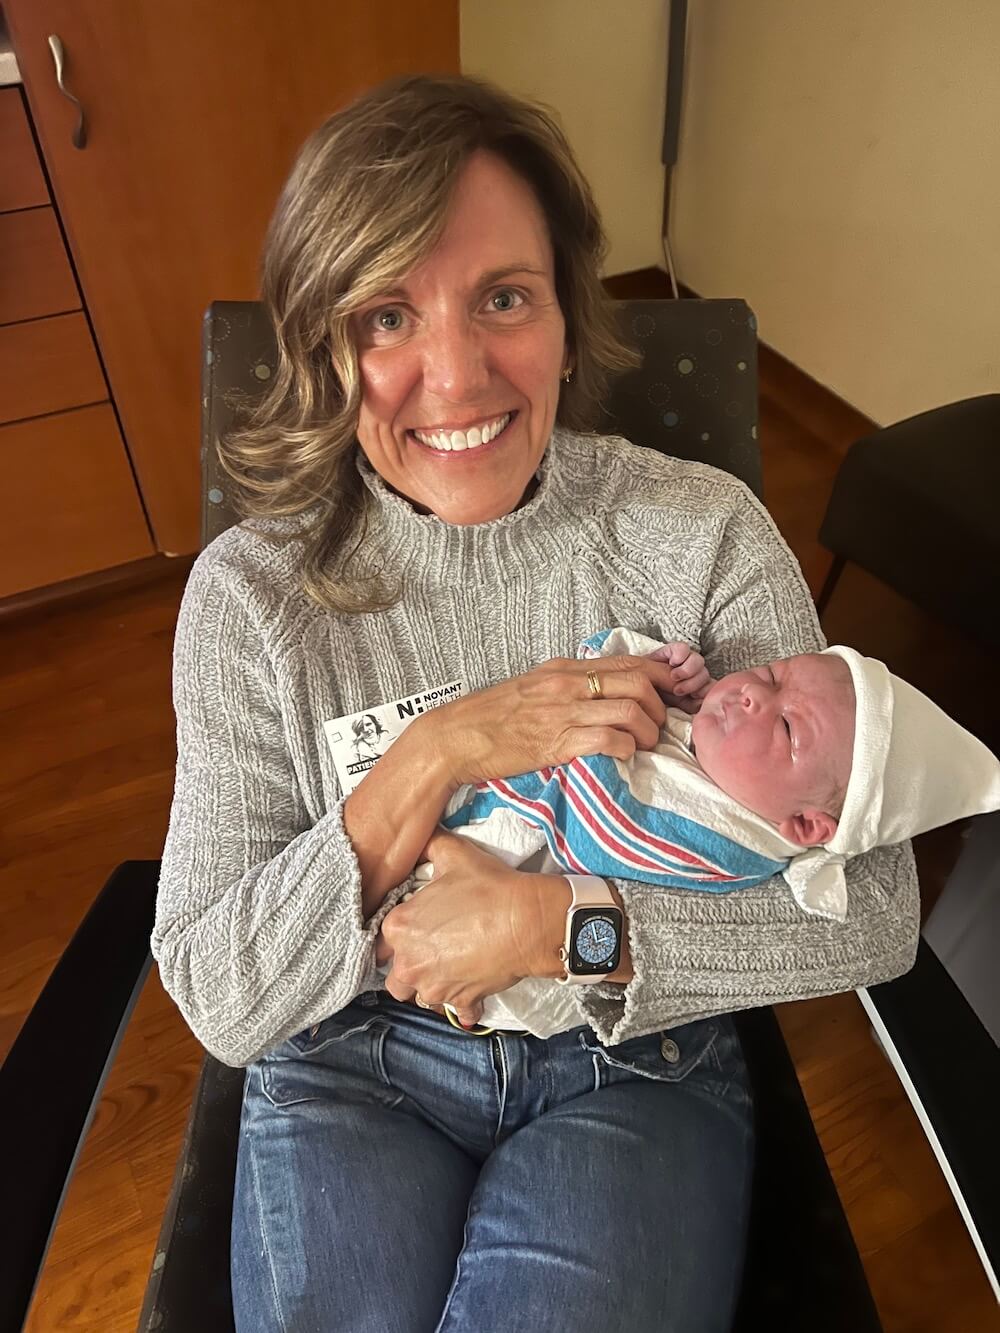 older woman holding newborn baby in hospital